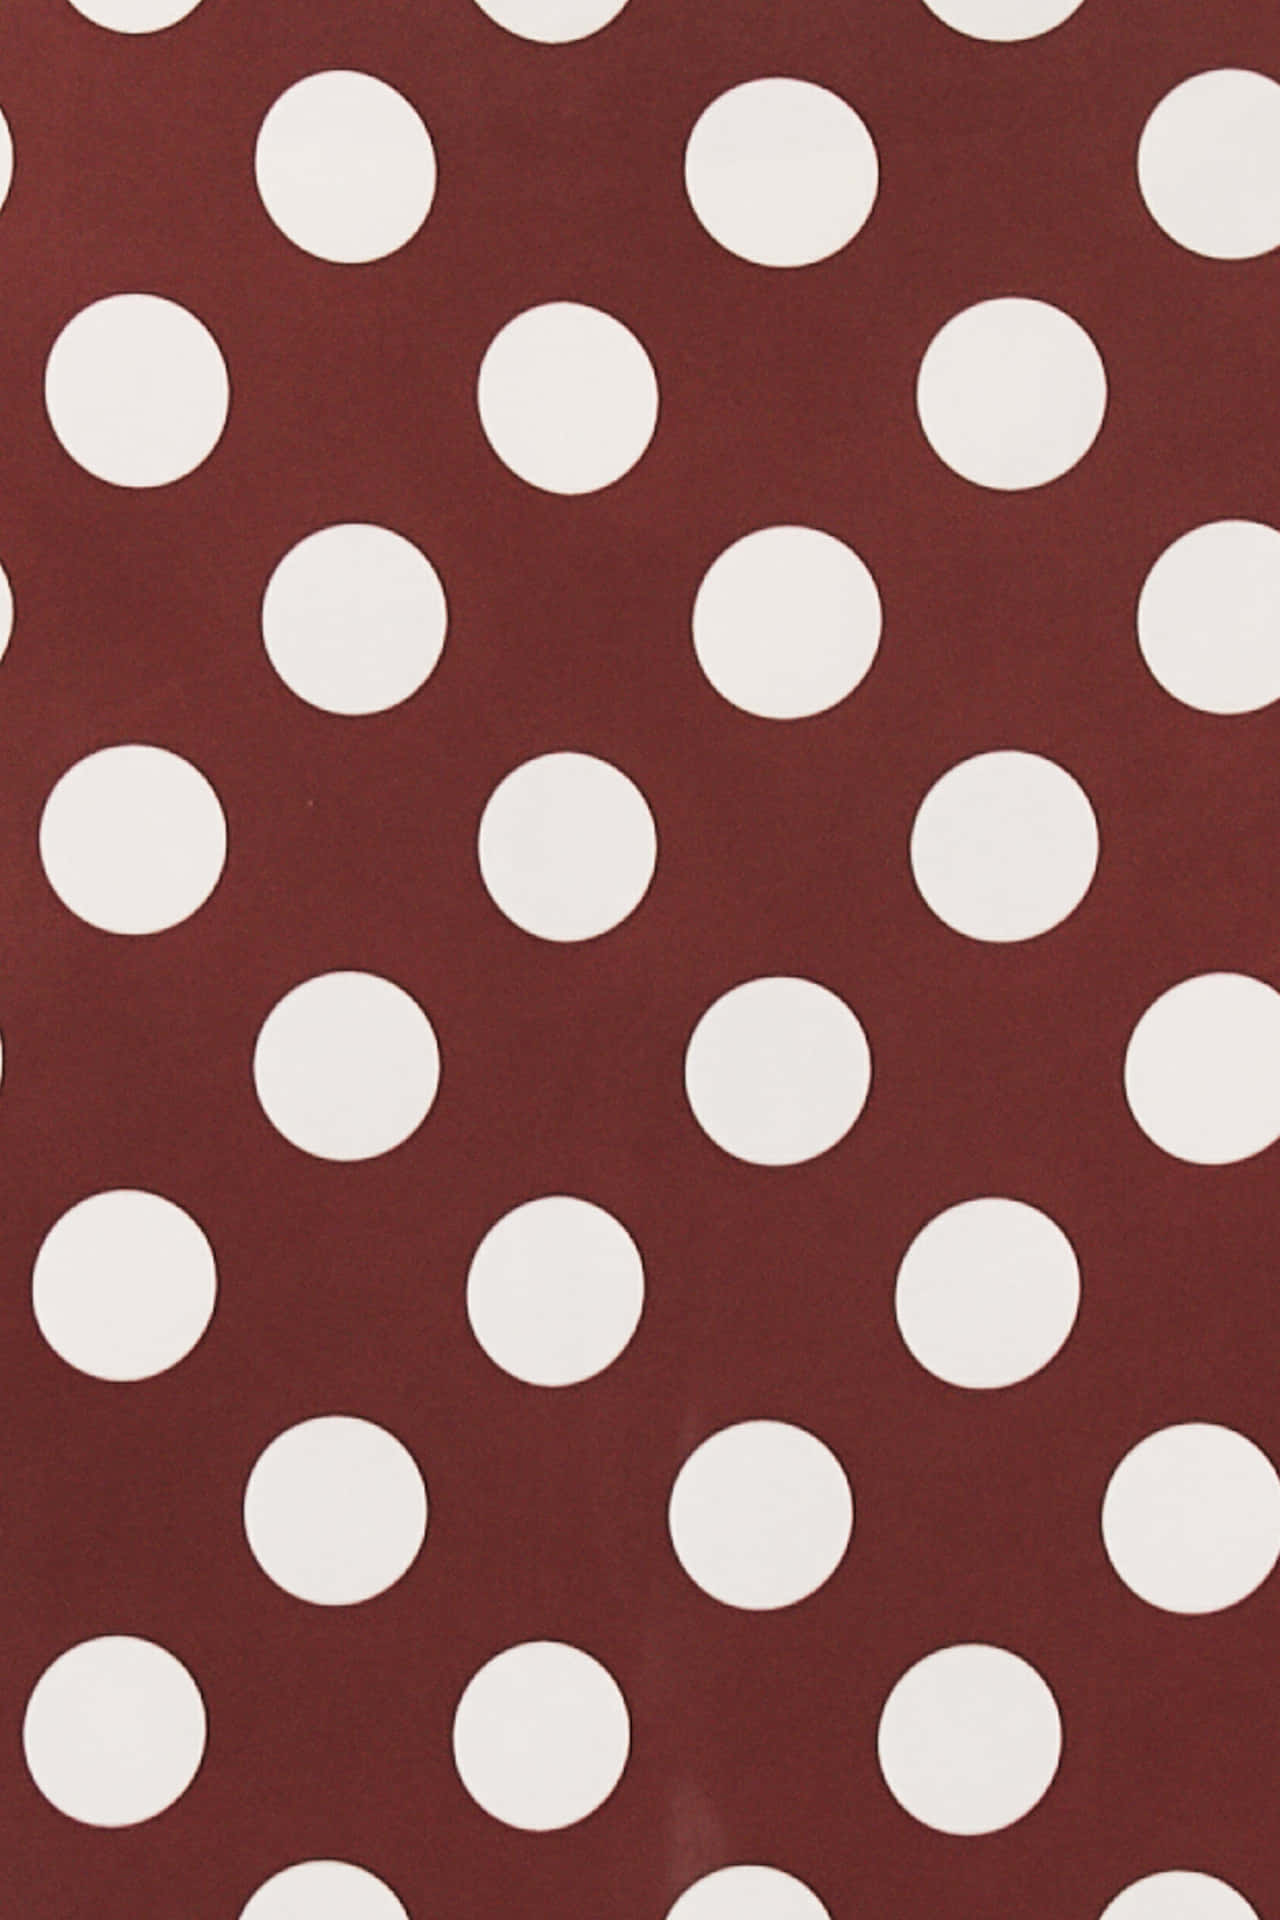 Brown Polka Dots Background Wallpaper